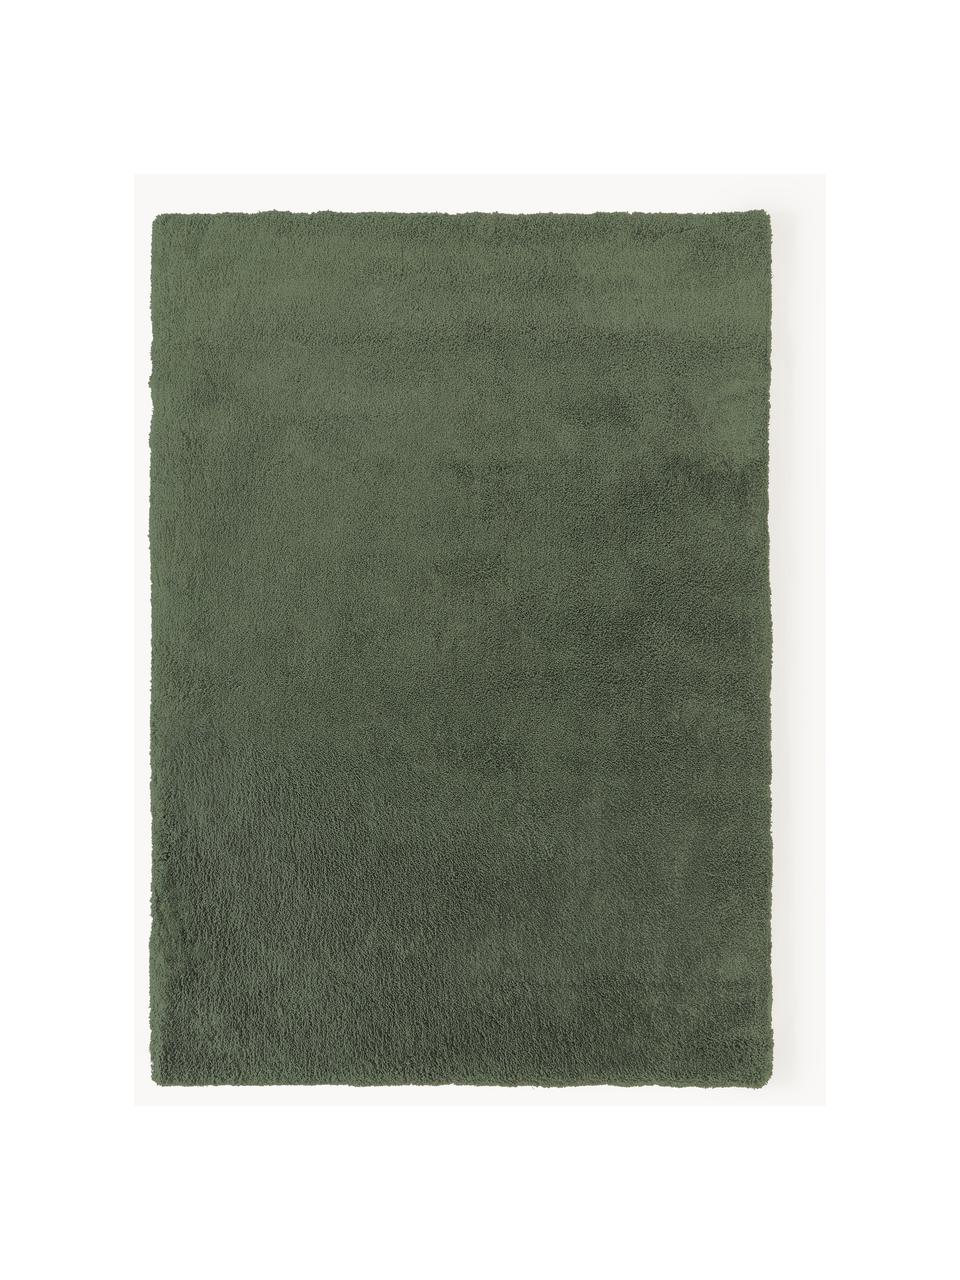 Tappeto morbido a pelo lungo Leighton, Retro: 70% poliestere, 30% coton, Verde scuro, Larg. 120 x Lung. 180 cm (taglia S)